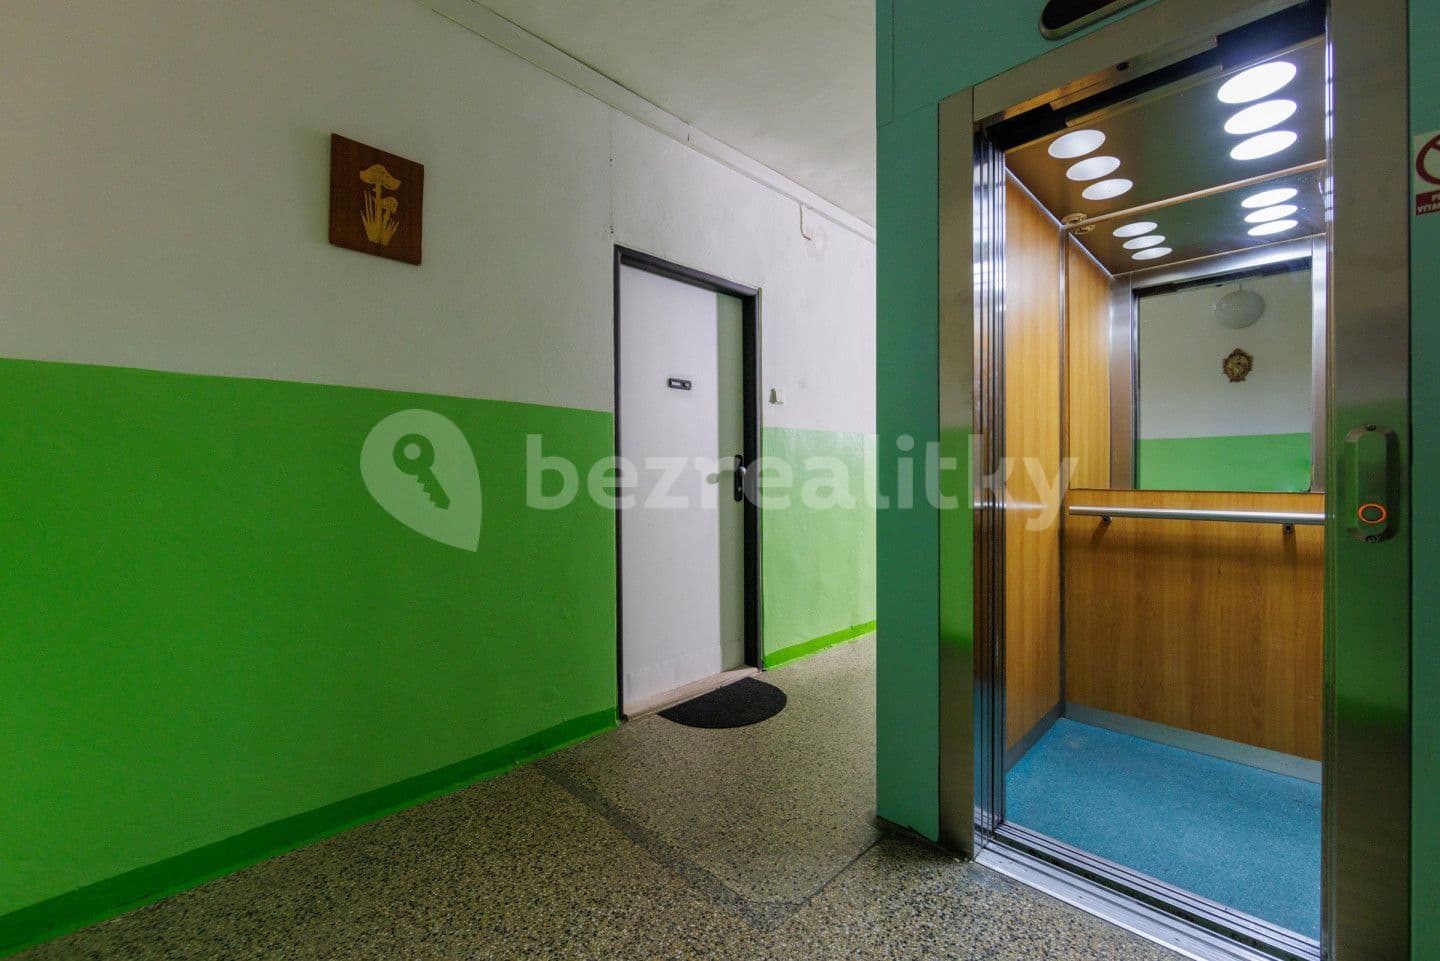 3 bedroom flat for sale, 58 m², Okružní, Nejdek, Karlovarský Region